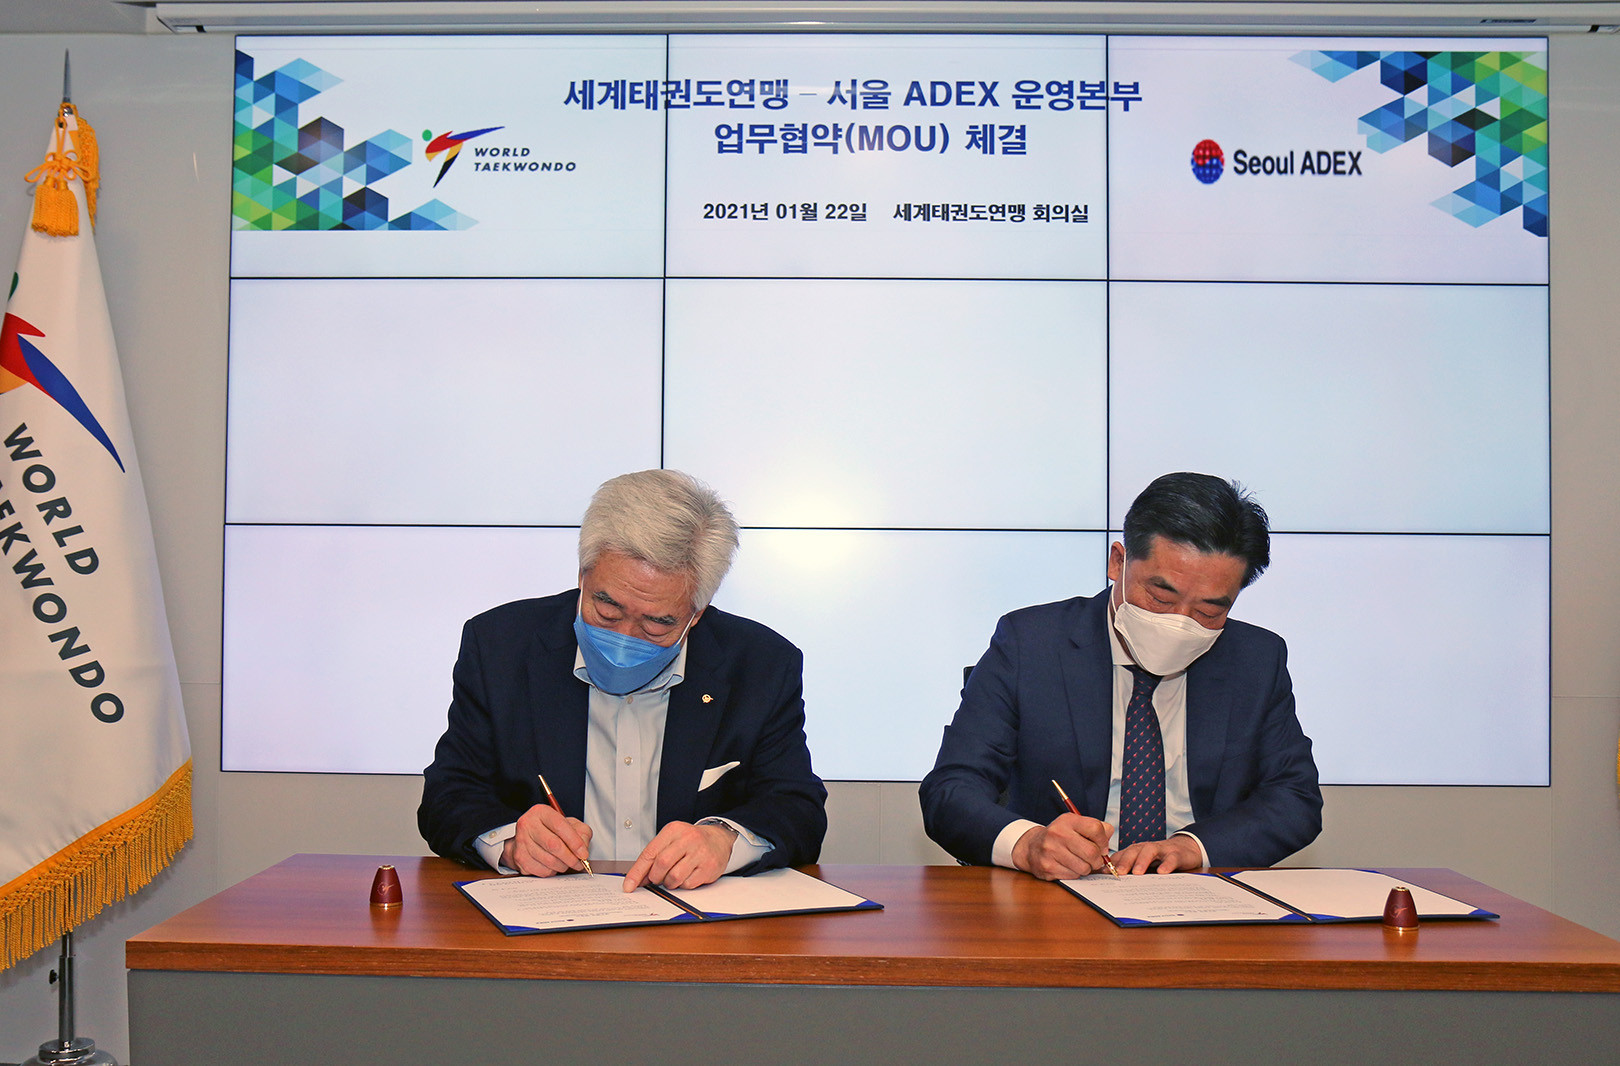 World Taekwondo has penned the deal with Seoul ADEX to showcase the sport to new audiences ©World Taekwondo